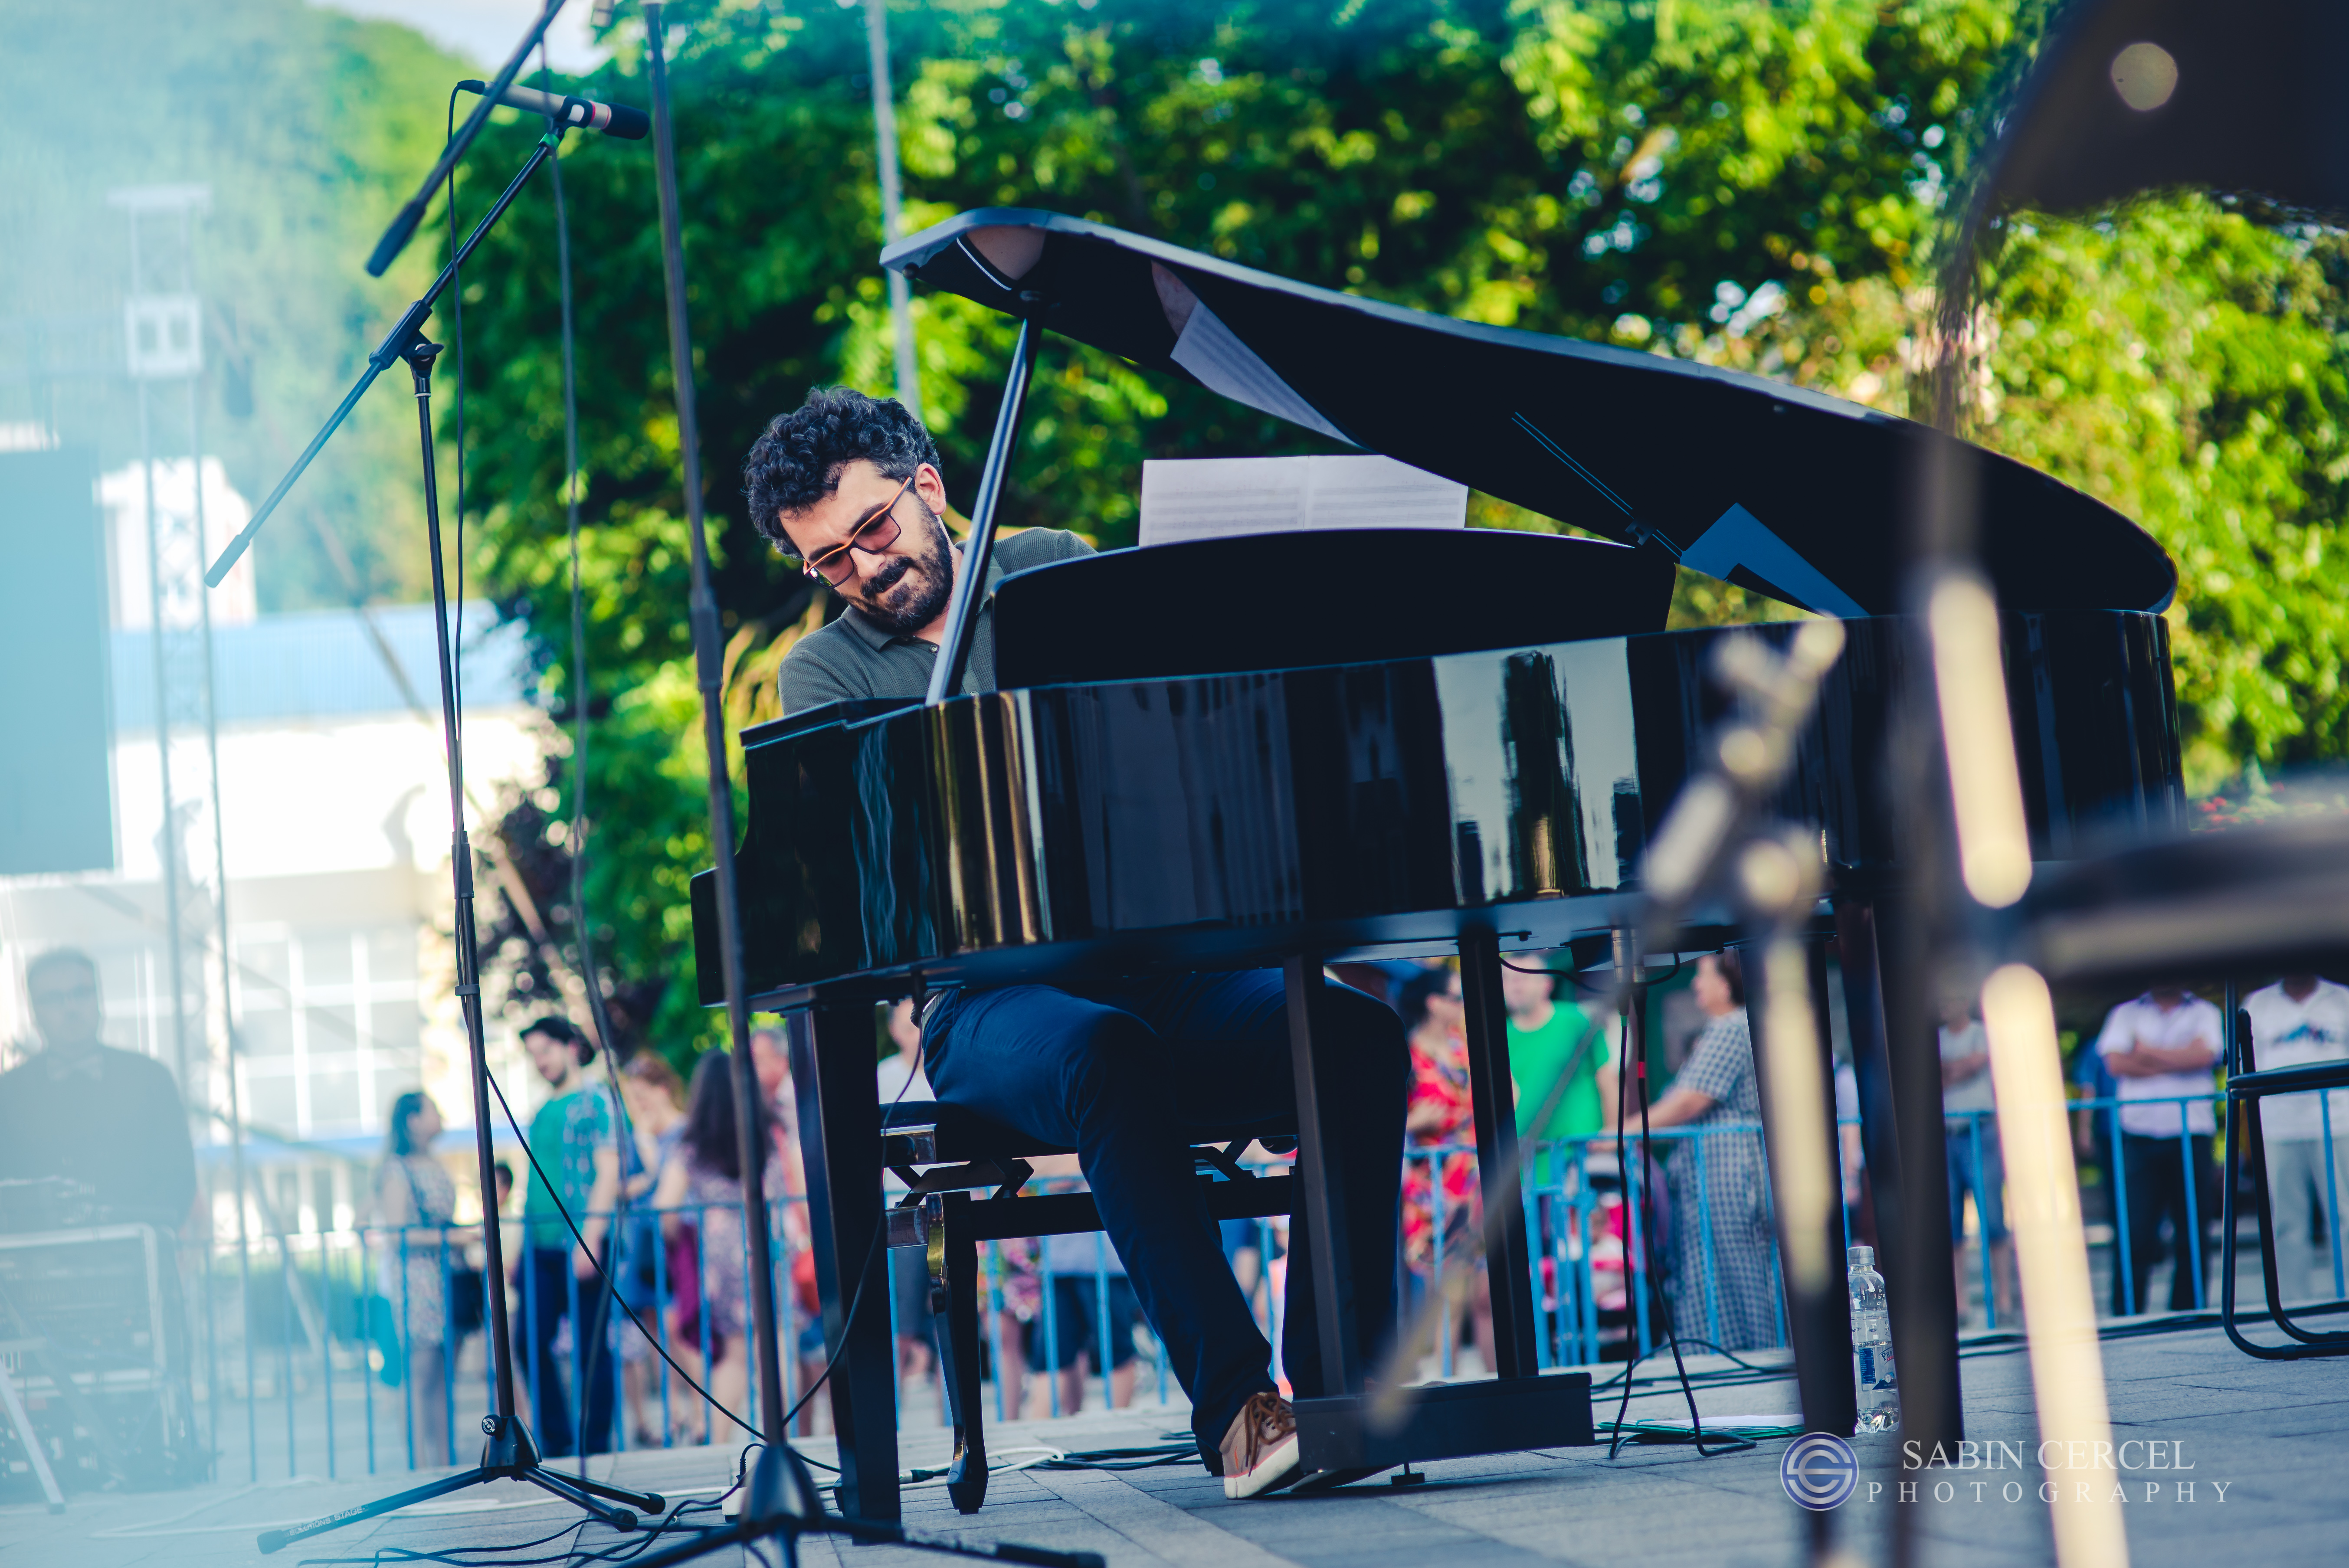 Pianist Teo Milea performing at Resita (Romania) on July 1, 2016